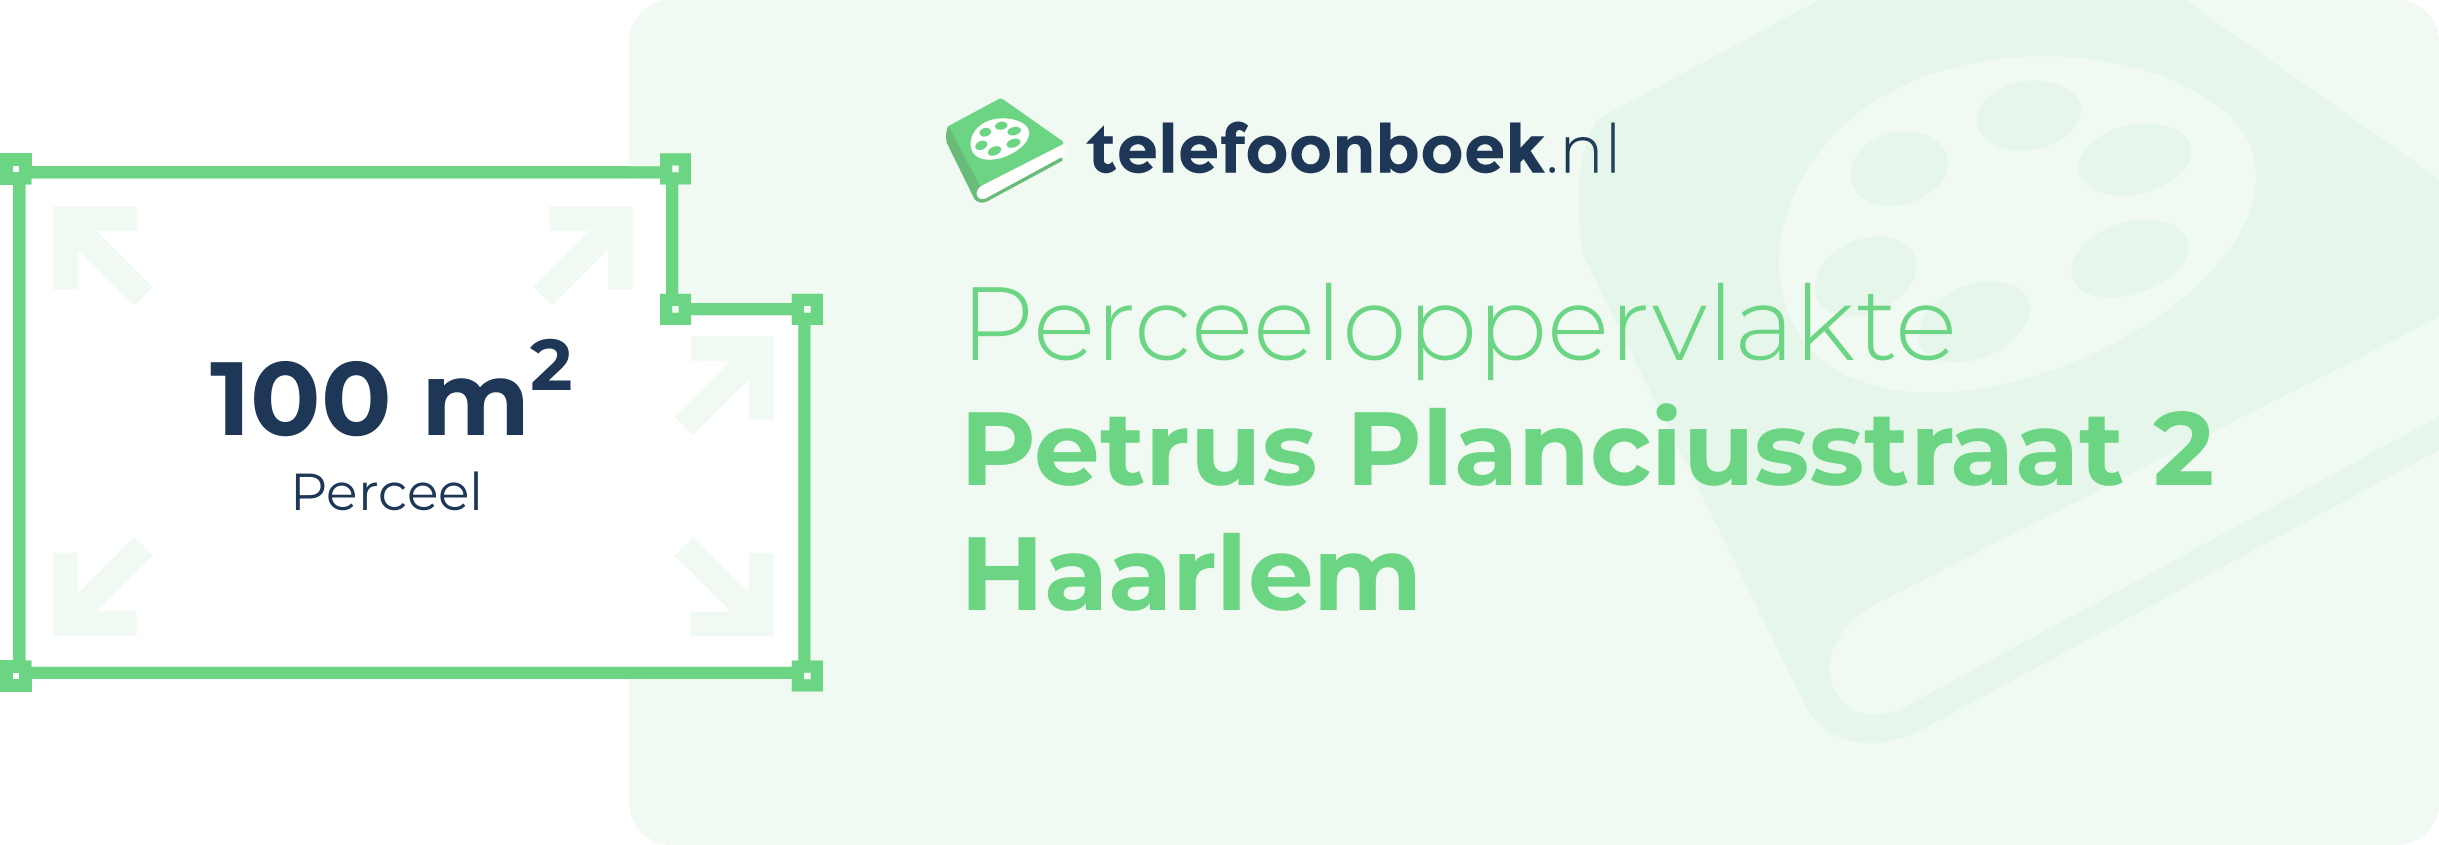 Perceeloppervlakte Petrus Planciusstraat 2 Haarlem